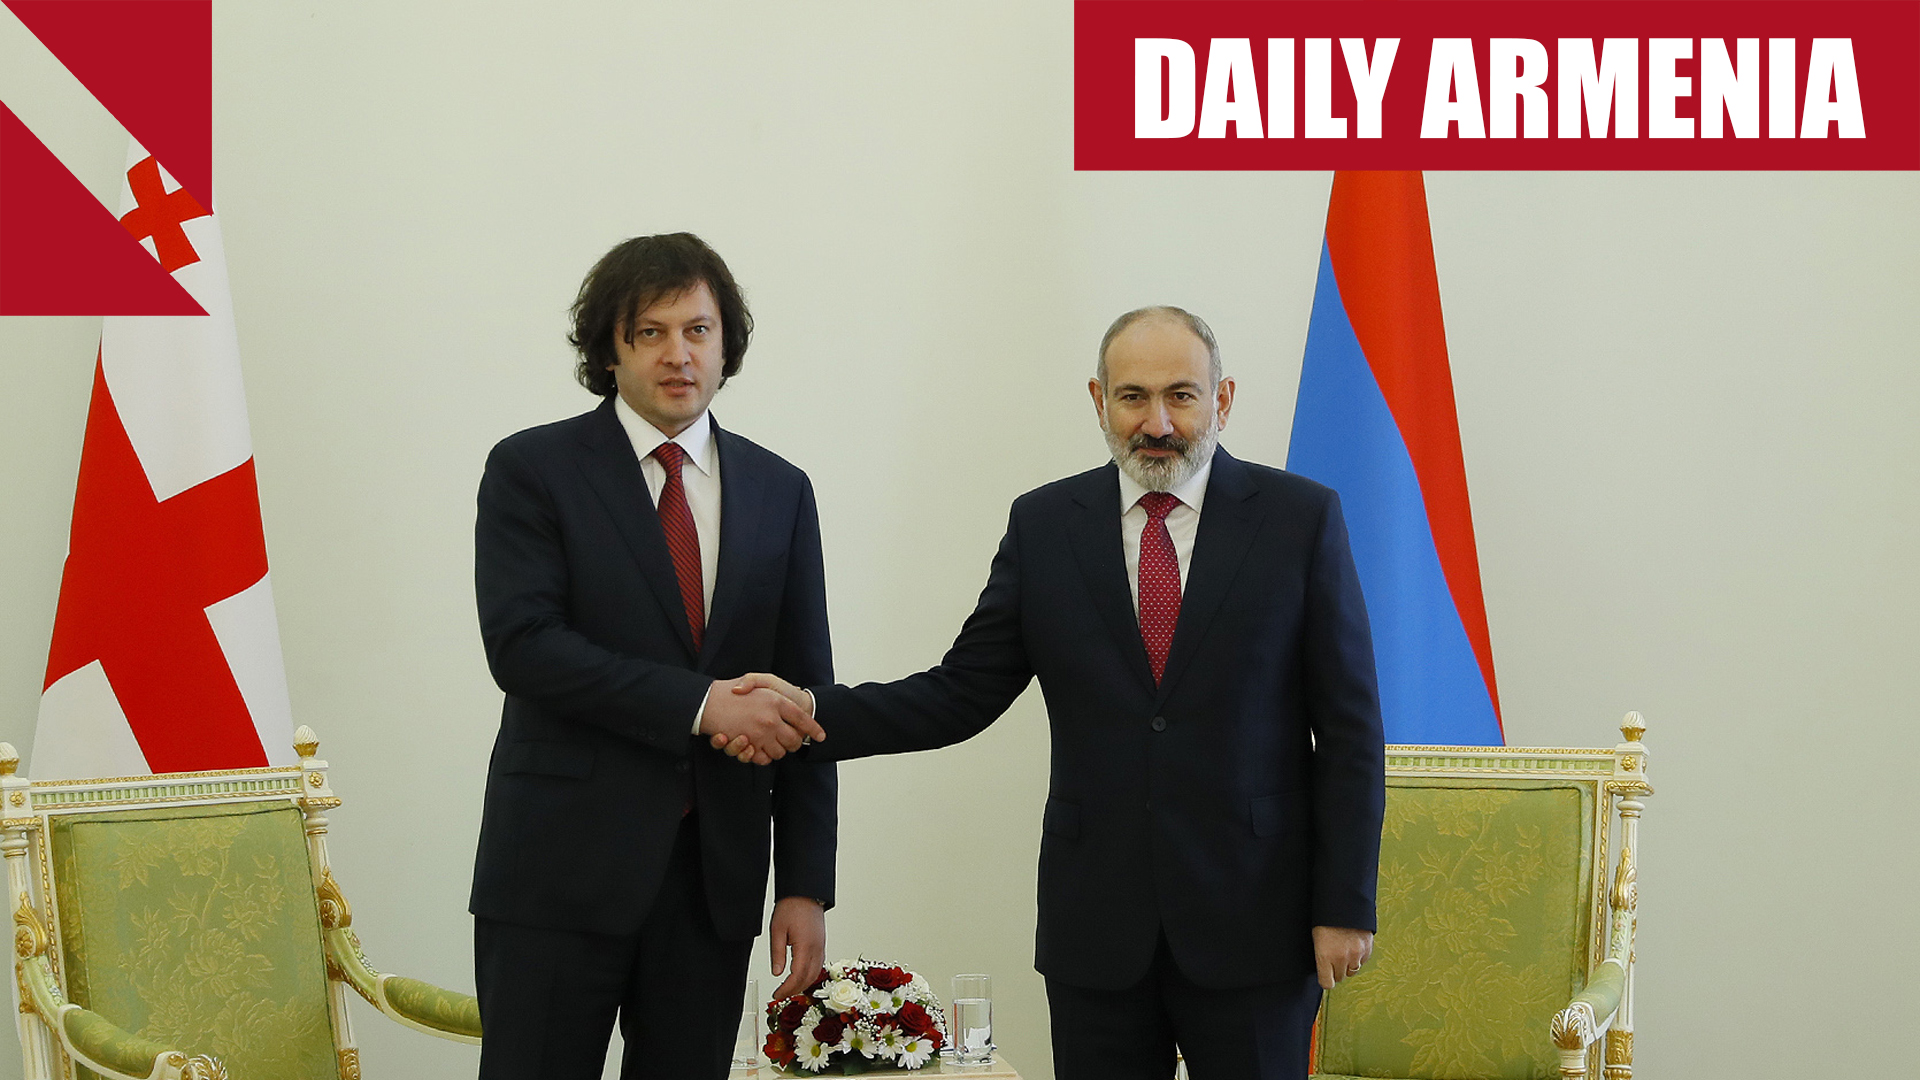 Georgia announces support for Armenia’s territorial integrity